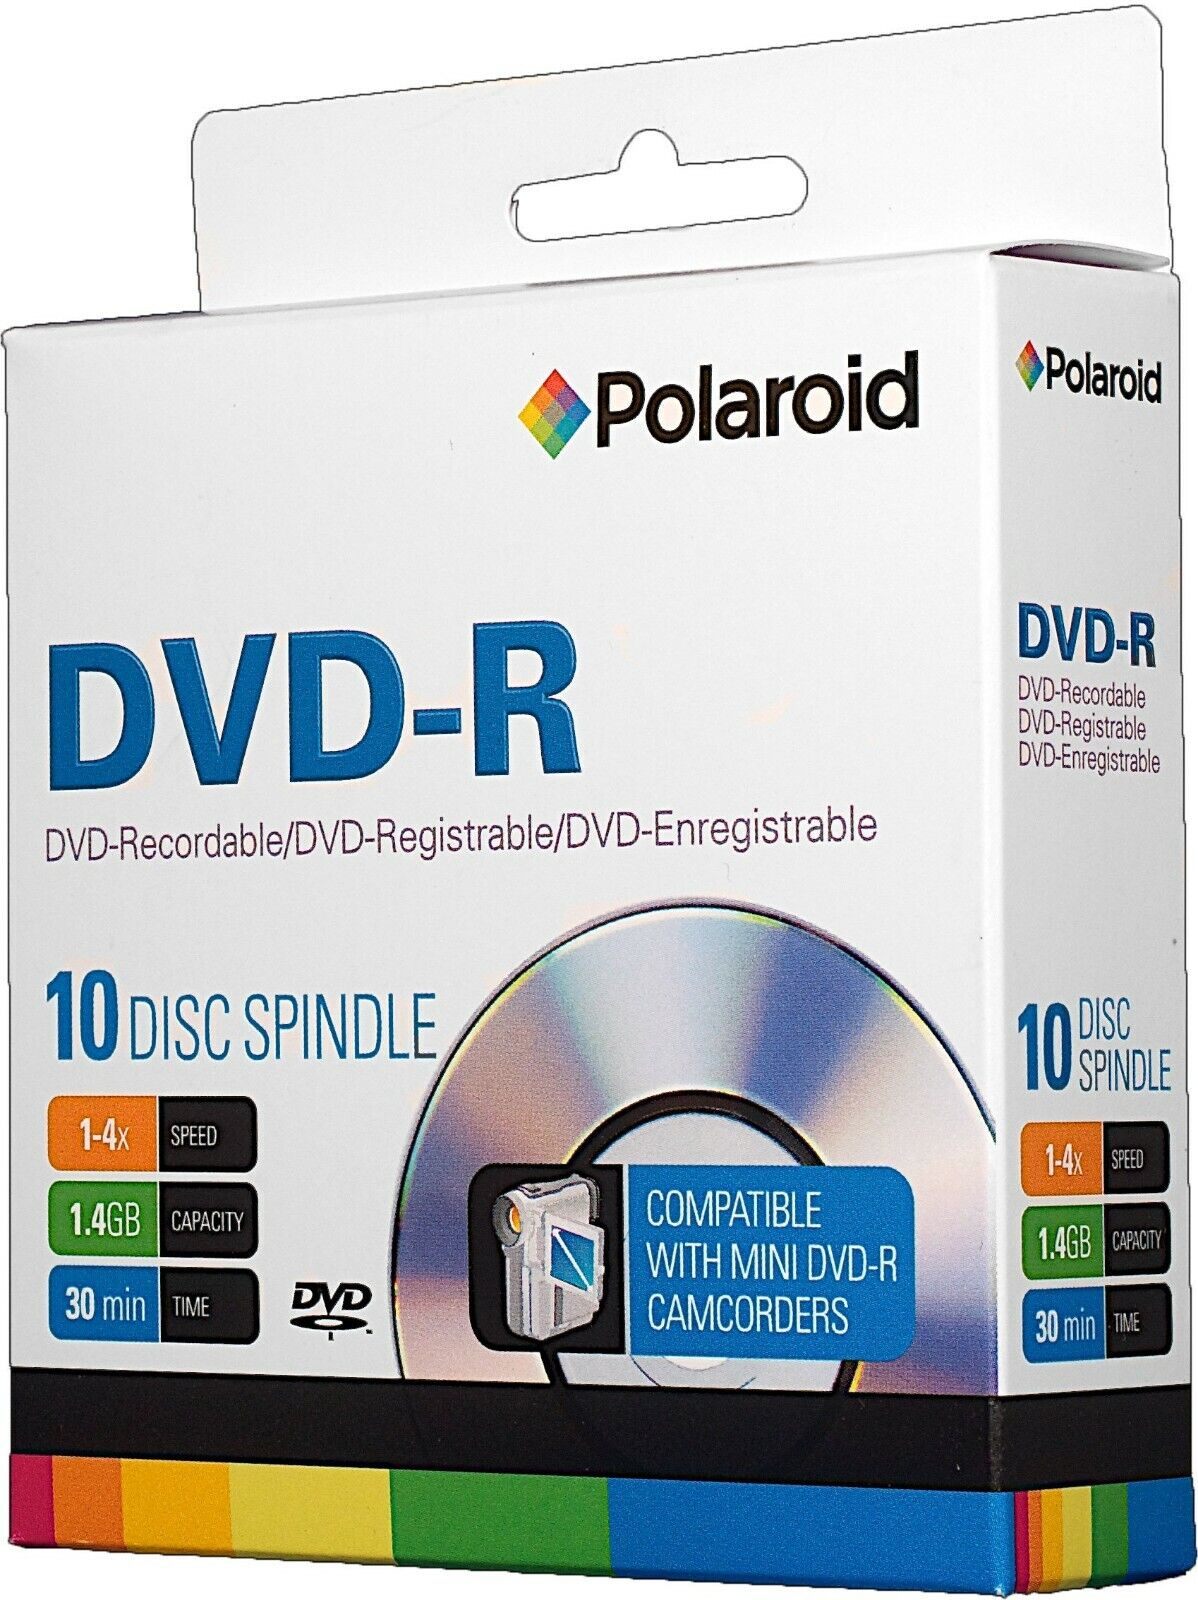 Polaroid DVD-R 1.4GB 30-Min 4x 8cm Mini DVD Disc for Camcorders, 10 PCS Spindle